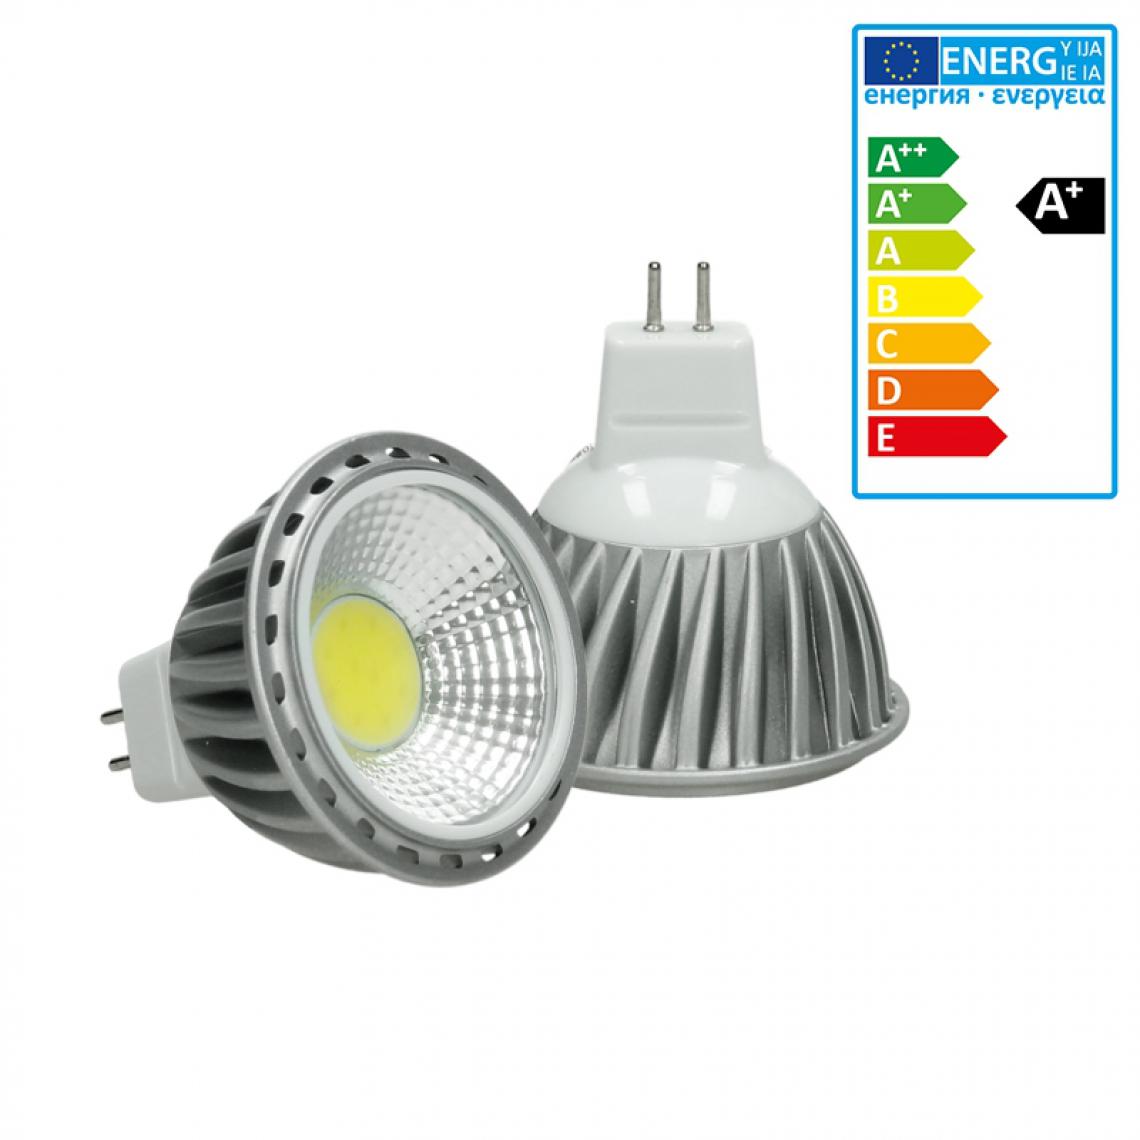 Ecd Germany - ECD Germany LED COB MR16 Spot Lampe Ampoule 6W blanc froid - Ampoules LED